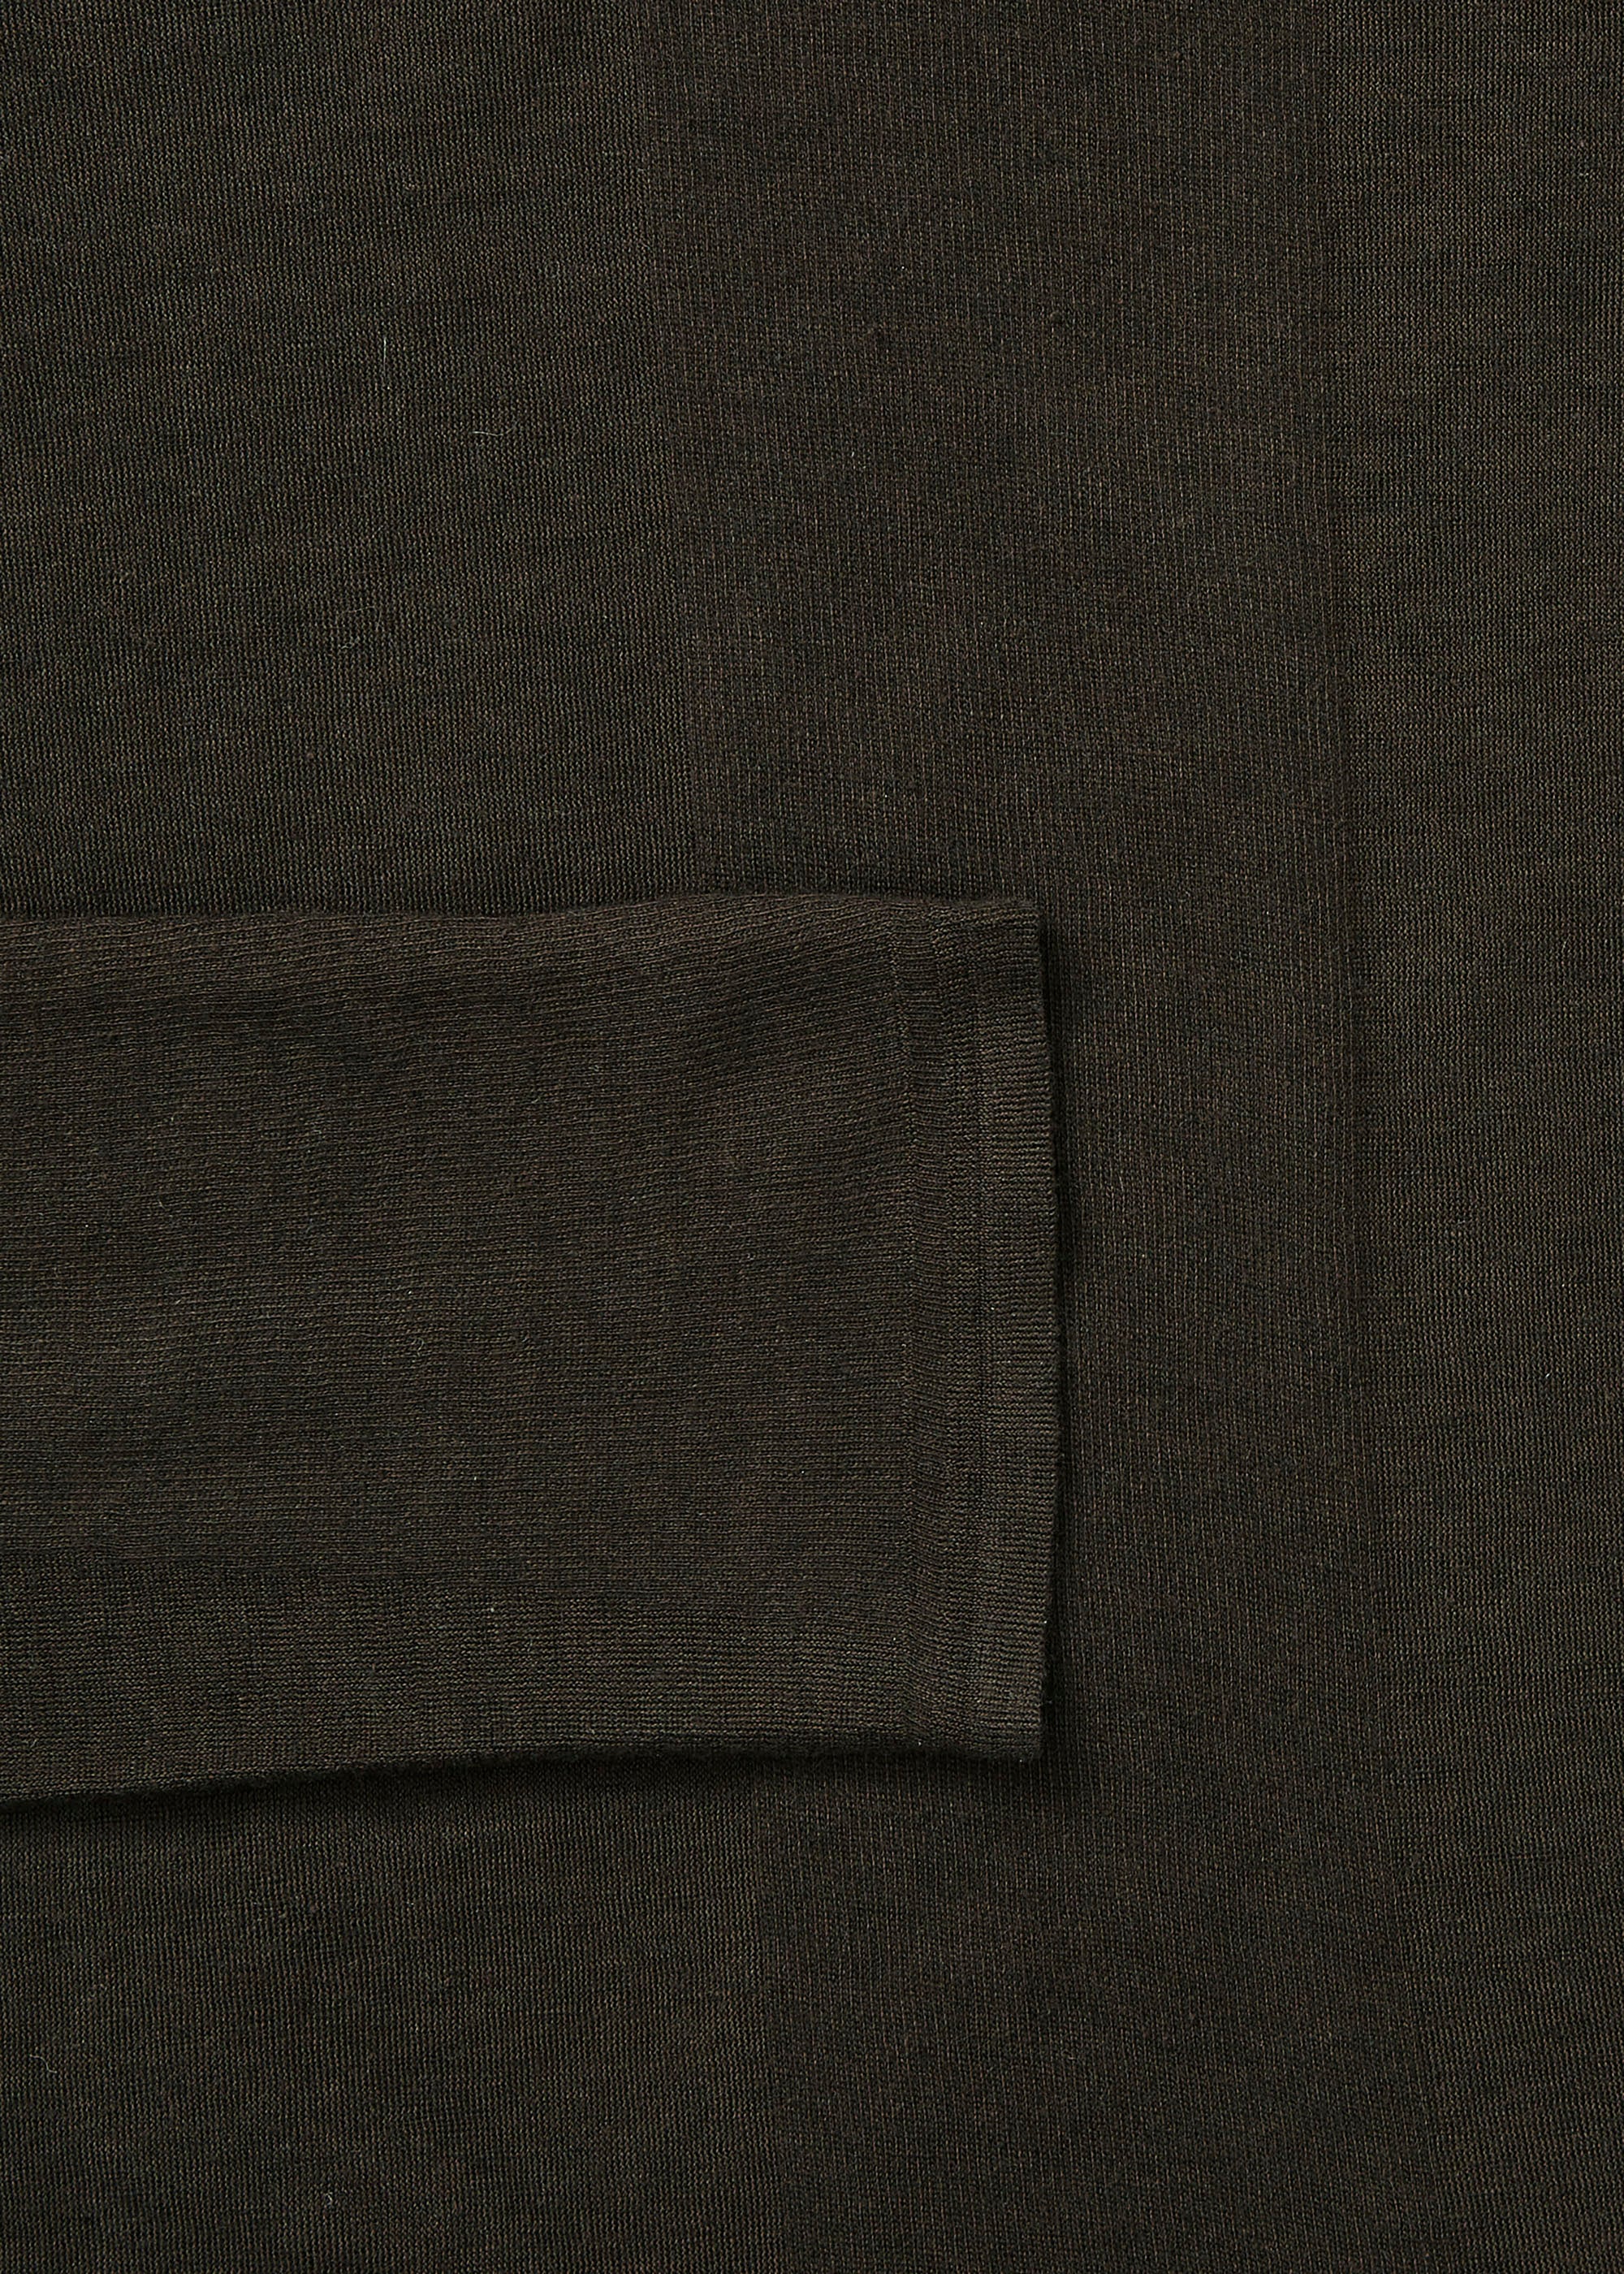 Gentle cashmere long sleeve | Dark Brown